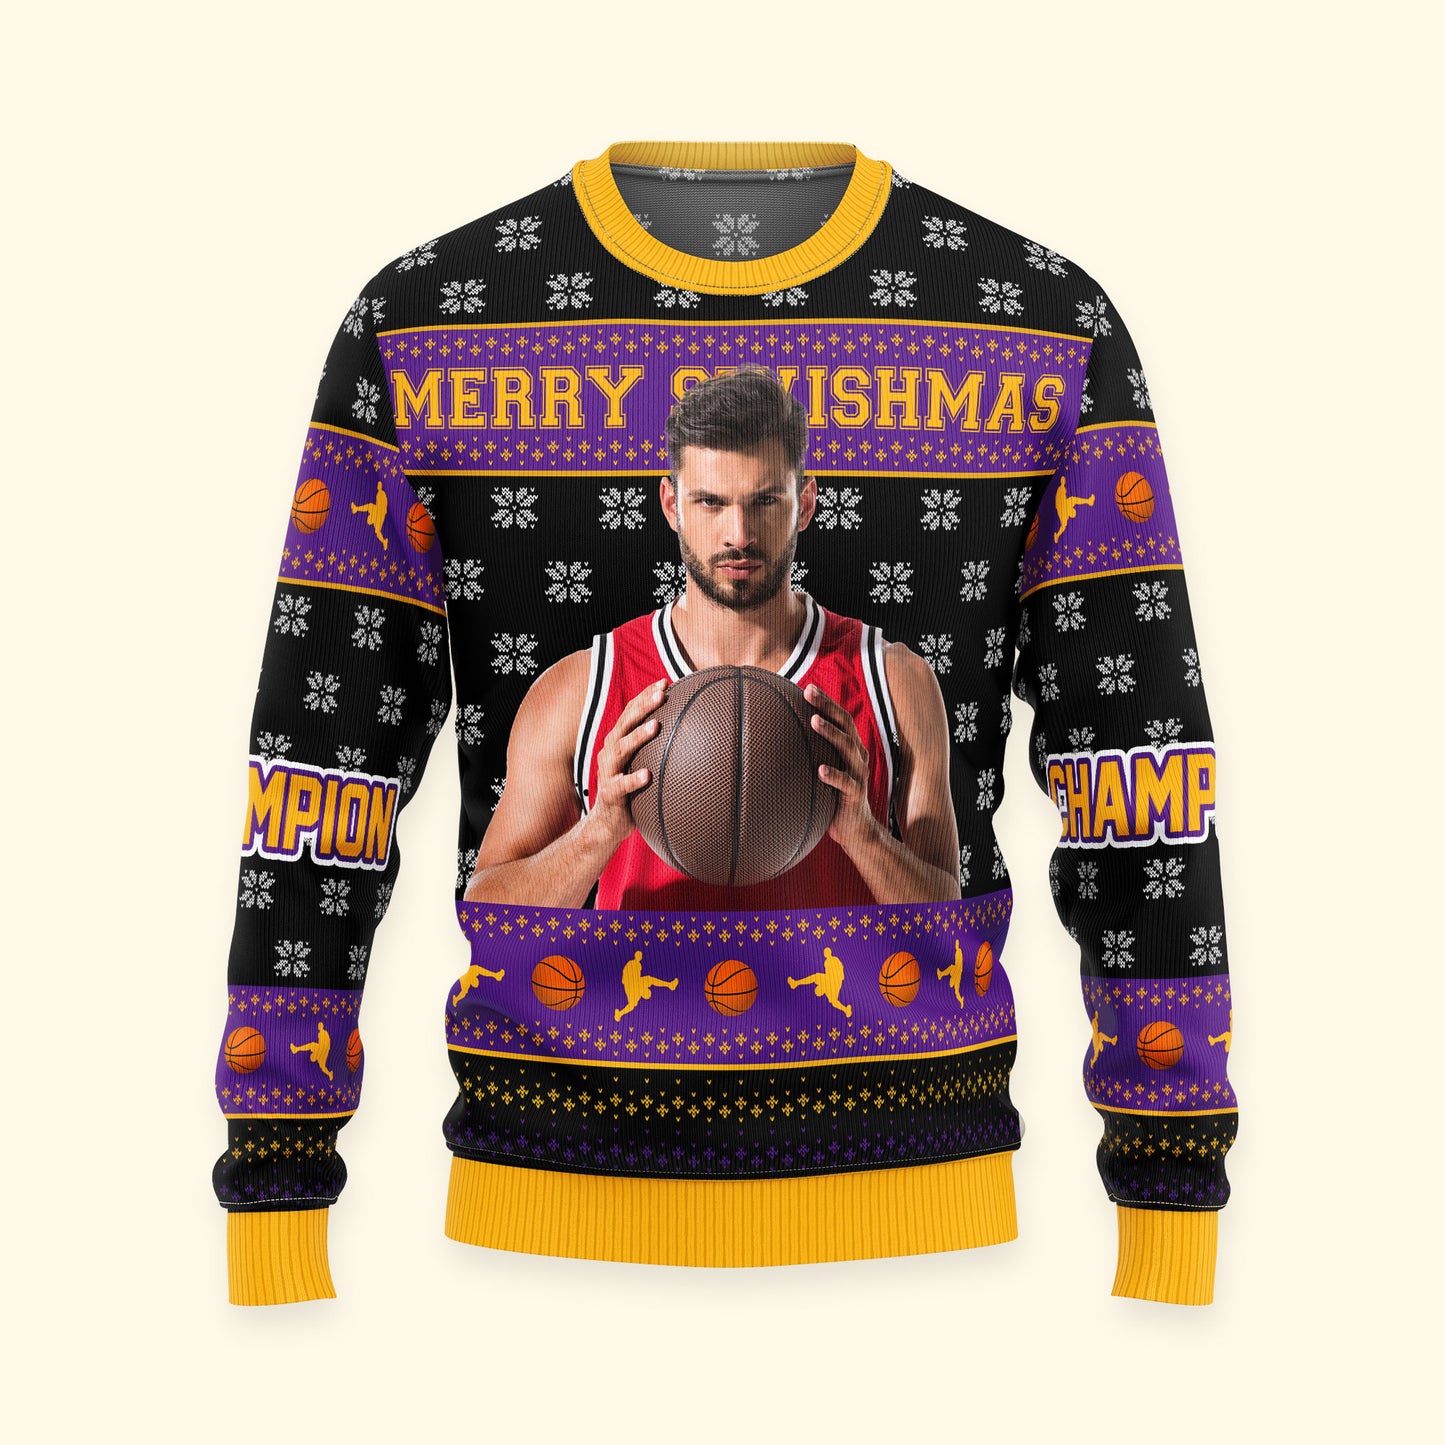 Merry Swishmas - Personalized Photo Ugly Sweater